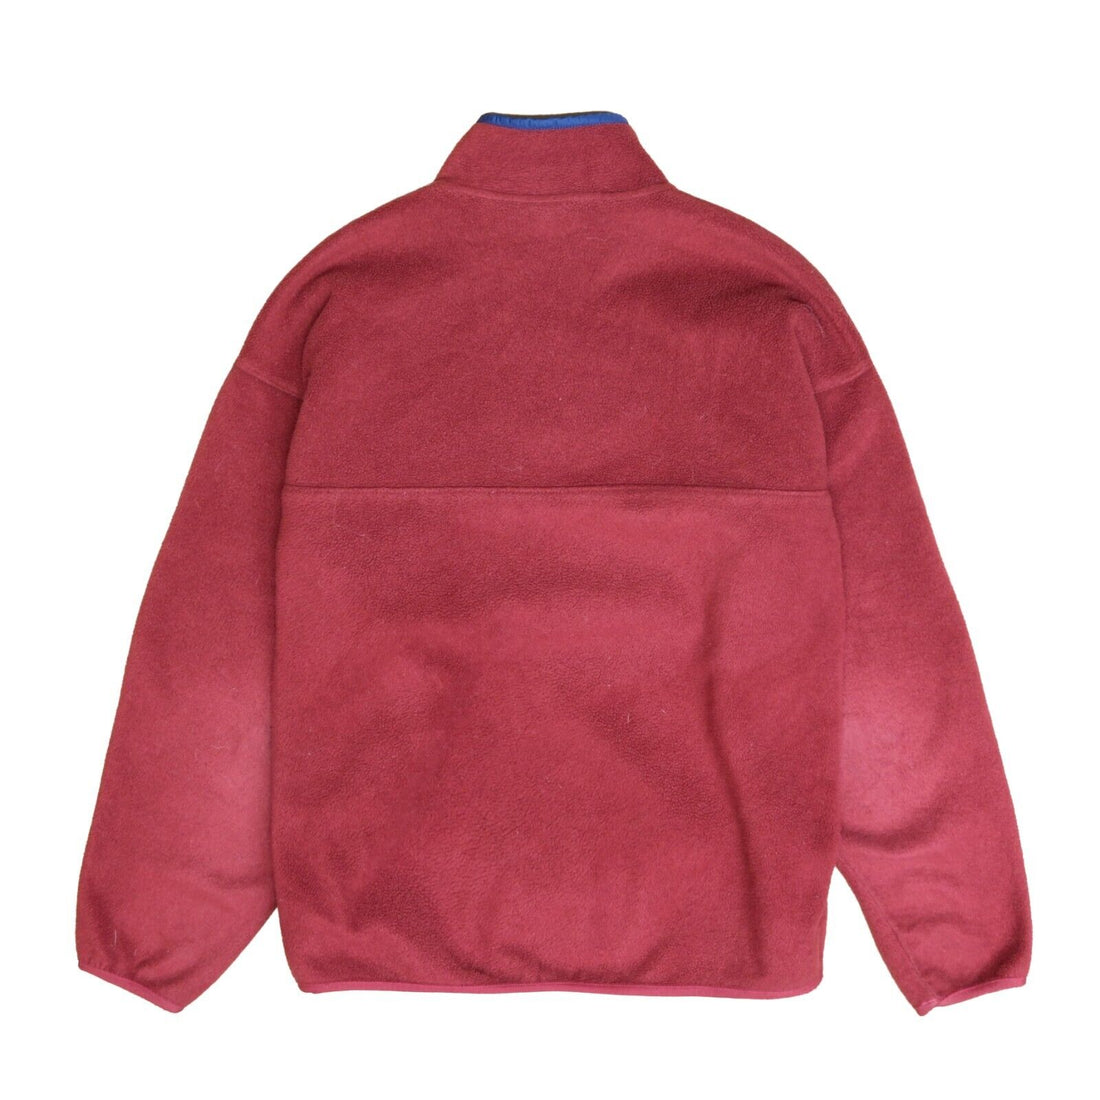 Vintage Patagonia Snap-T Fleece Jacket Size XL Maroon Red